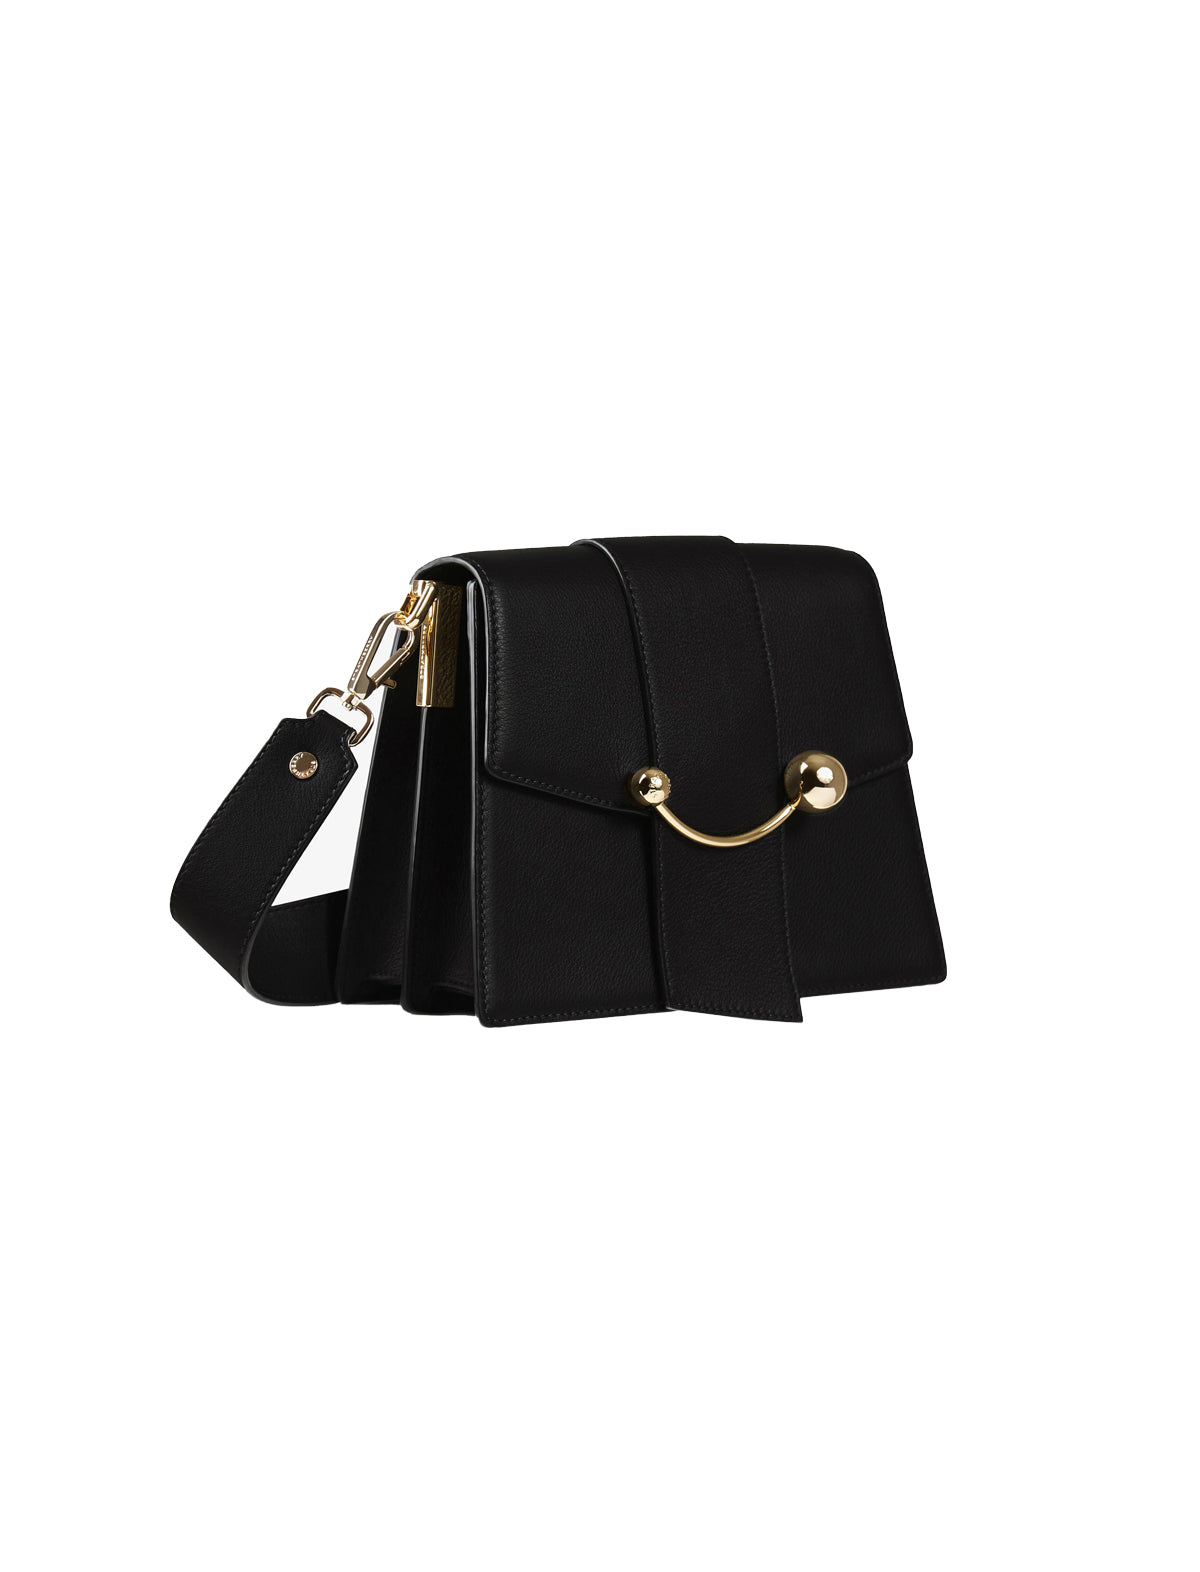 STRATHBERRY Box Crescent Bag in Black